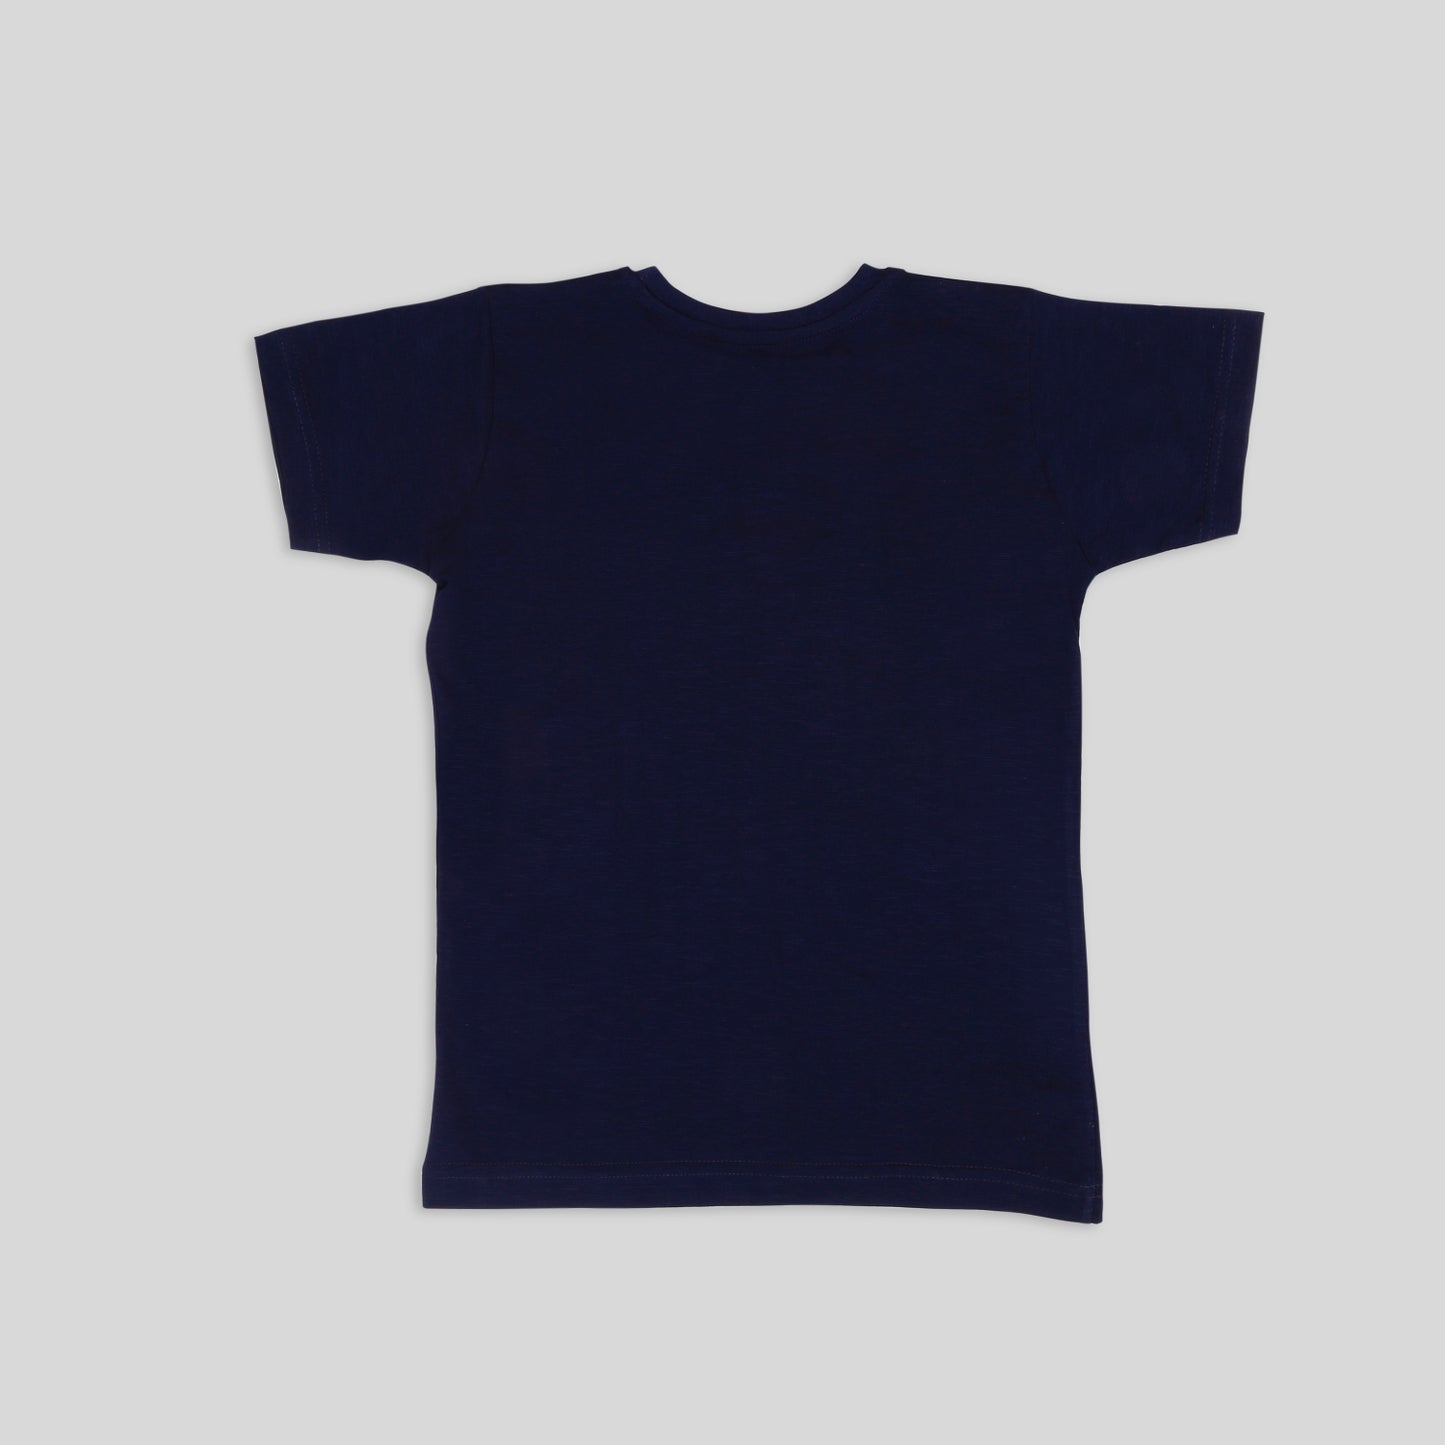 Shrug & Roll: Unique T-Shirt Set for Casual Comfort Galore!